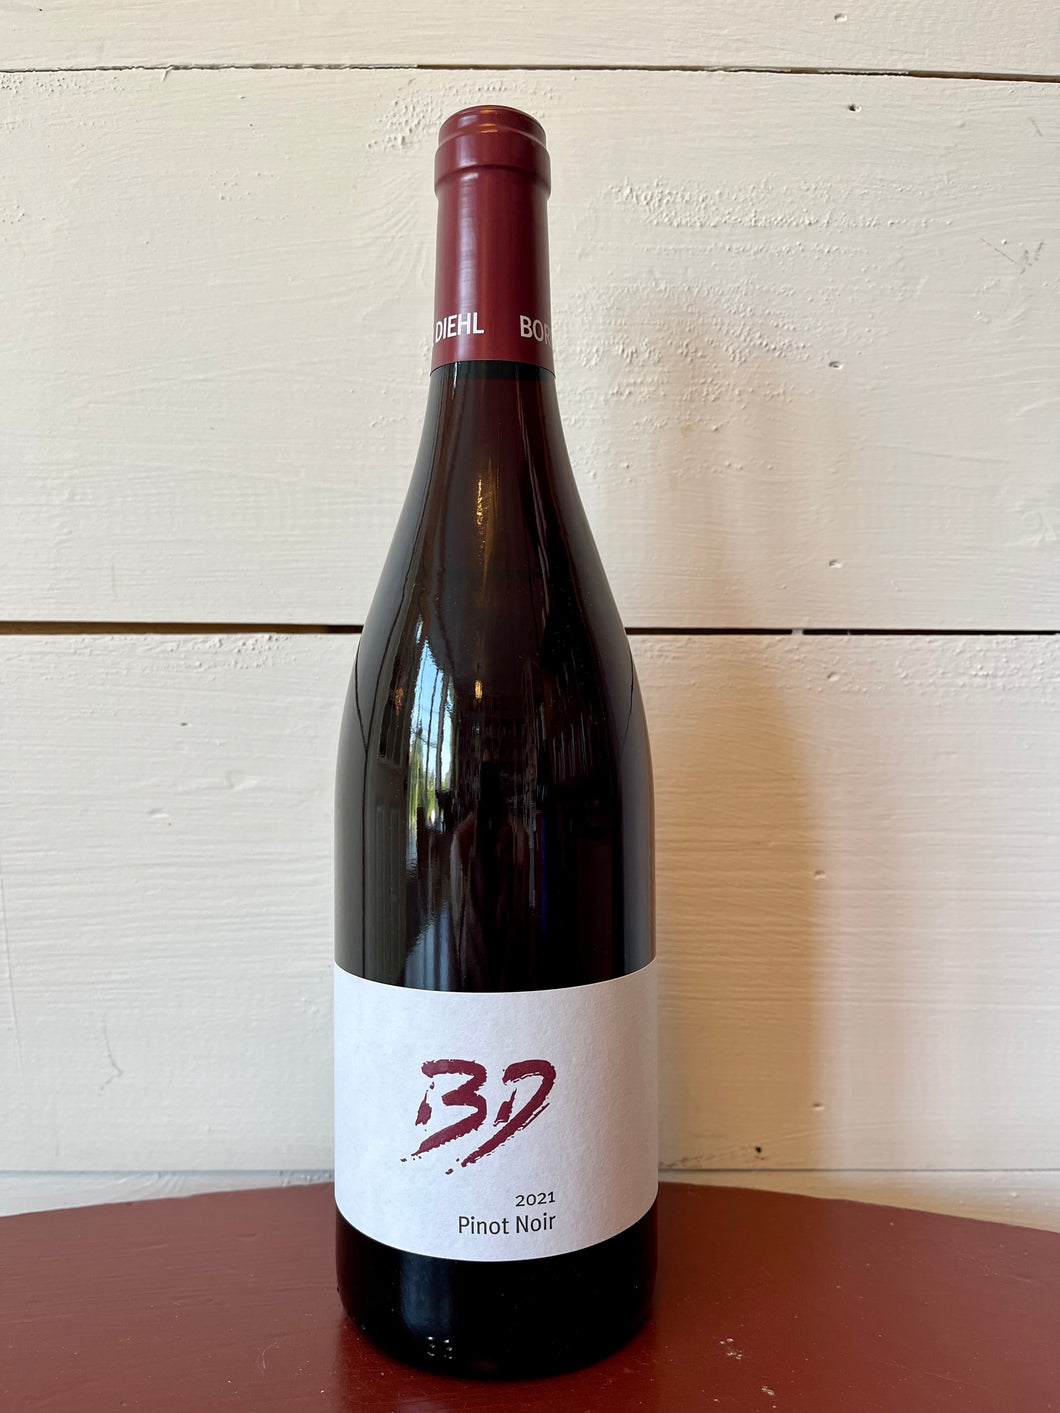 Borell-Diehl, Pinot Noir Troken 2021